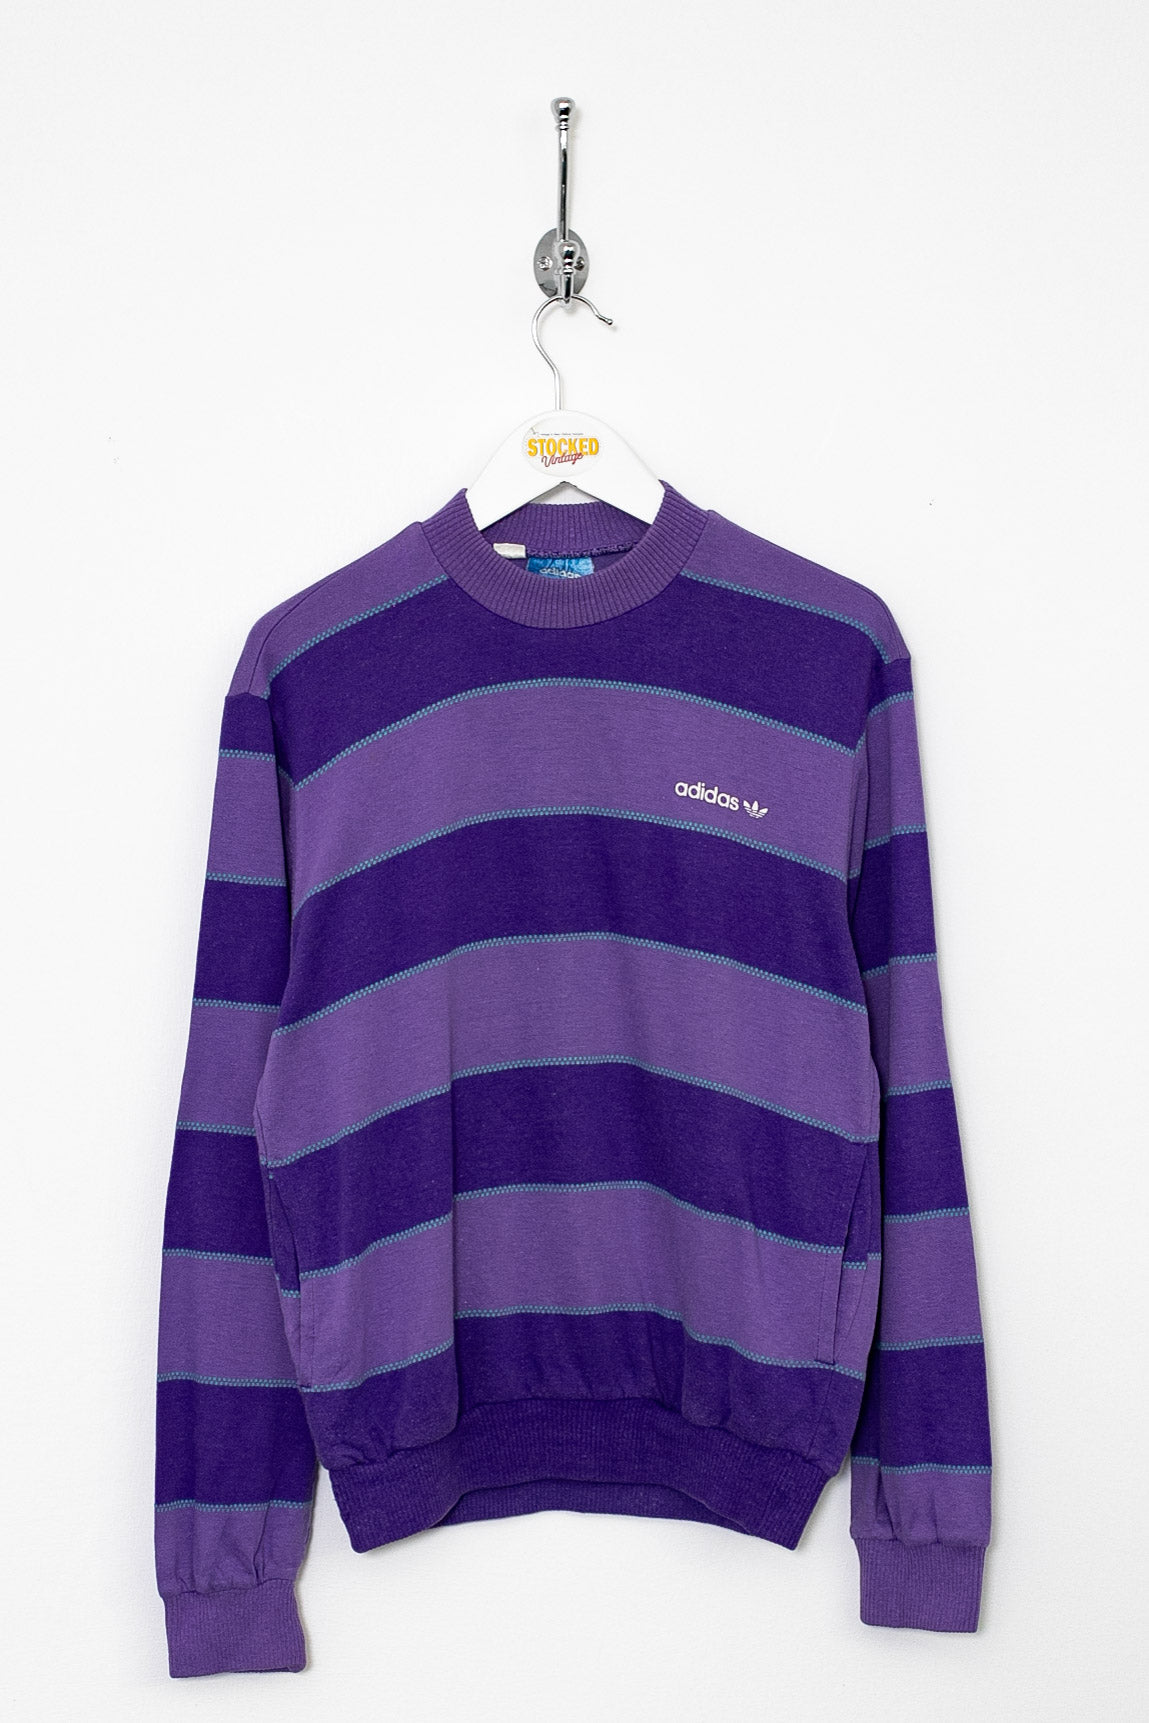 90s Adidas Sweatshirt (XS)